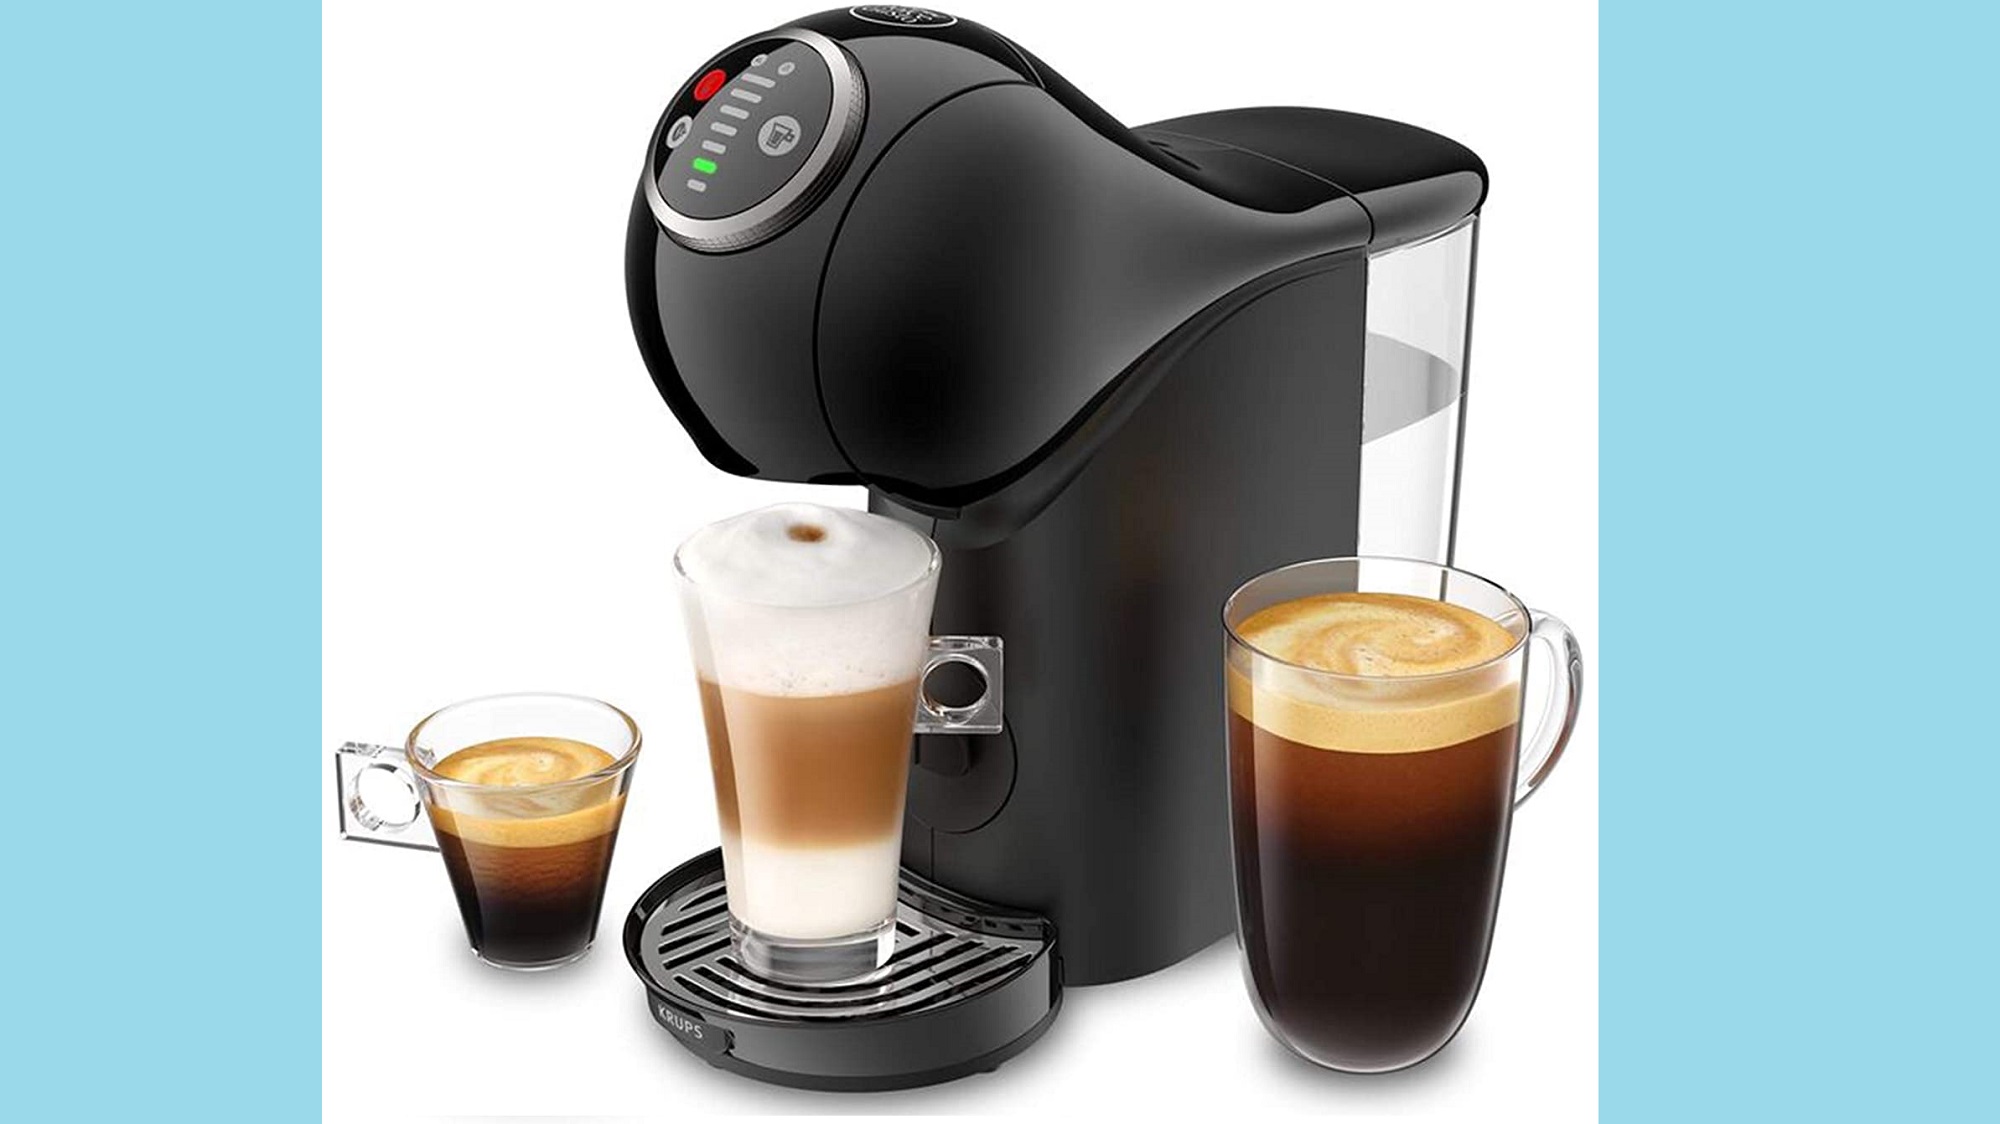 NESCAFÉ Dolce Gusto Coffee Maker Review